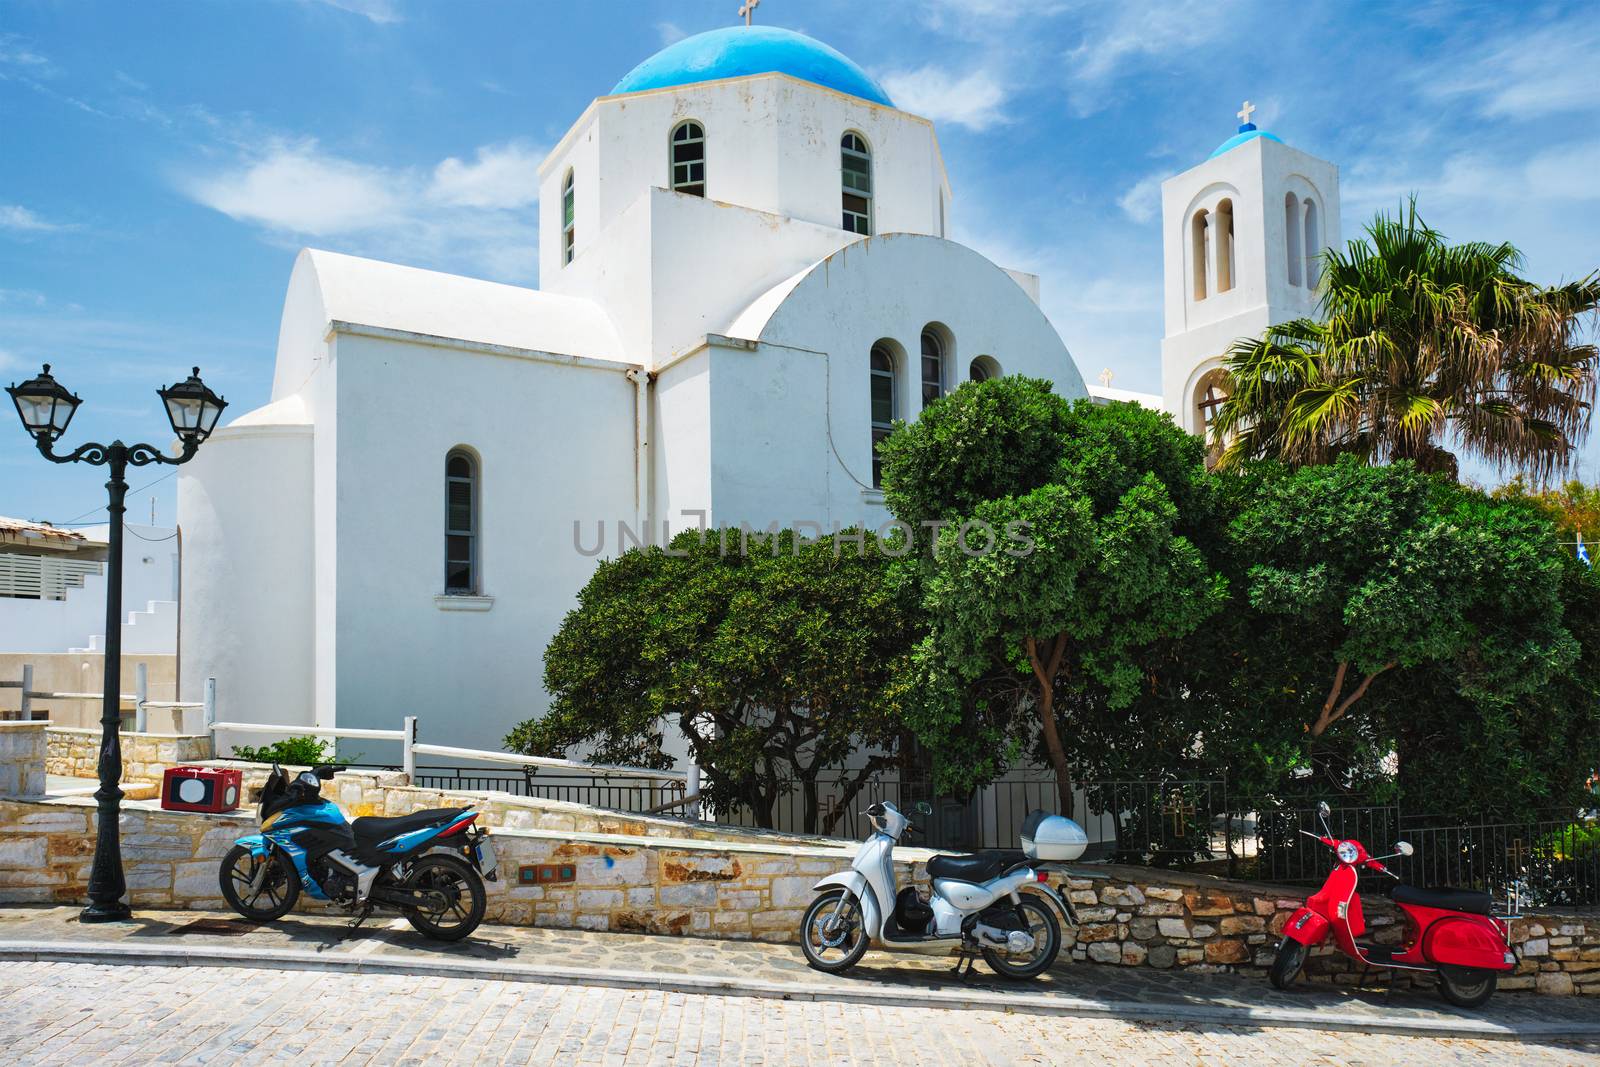 Naousa town church on Paros island, Greece by dimol